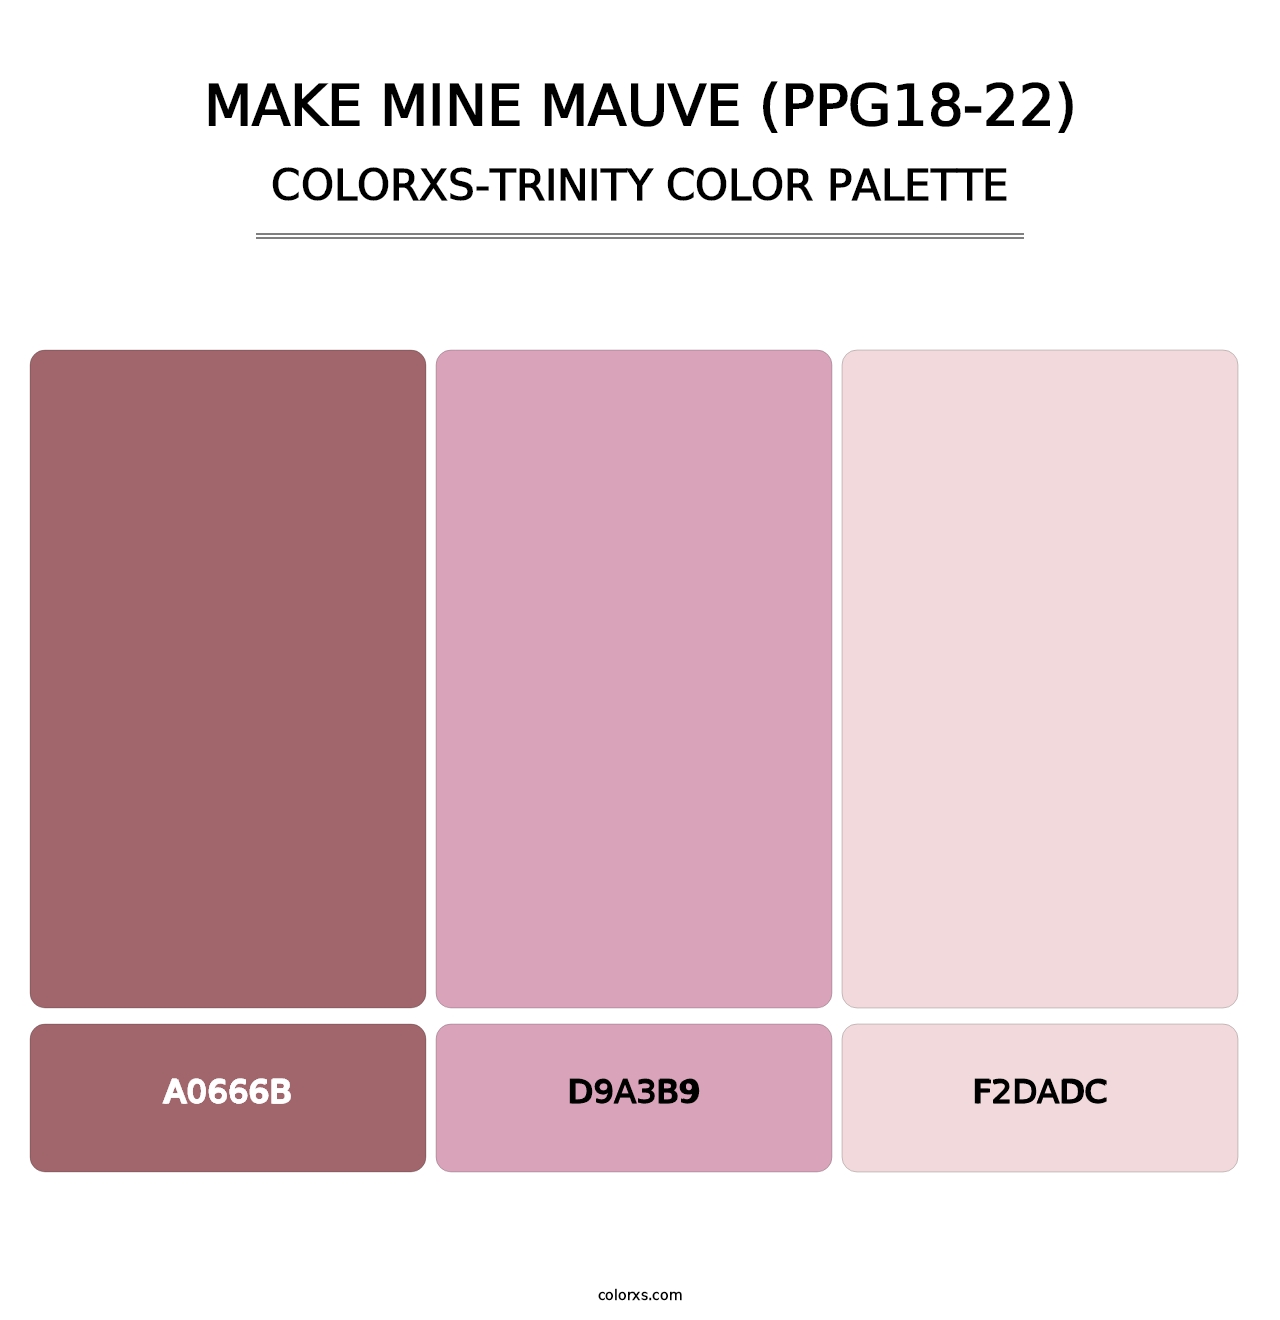 Make Mine Mauve (PPG18-22) - Colorxs Trinity Palette